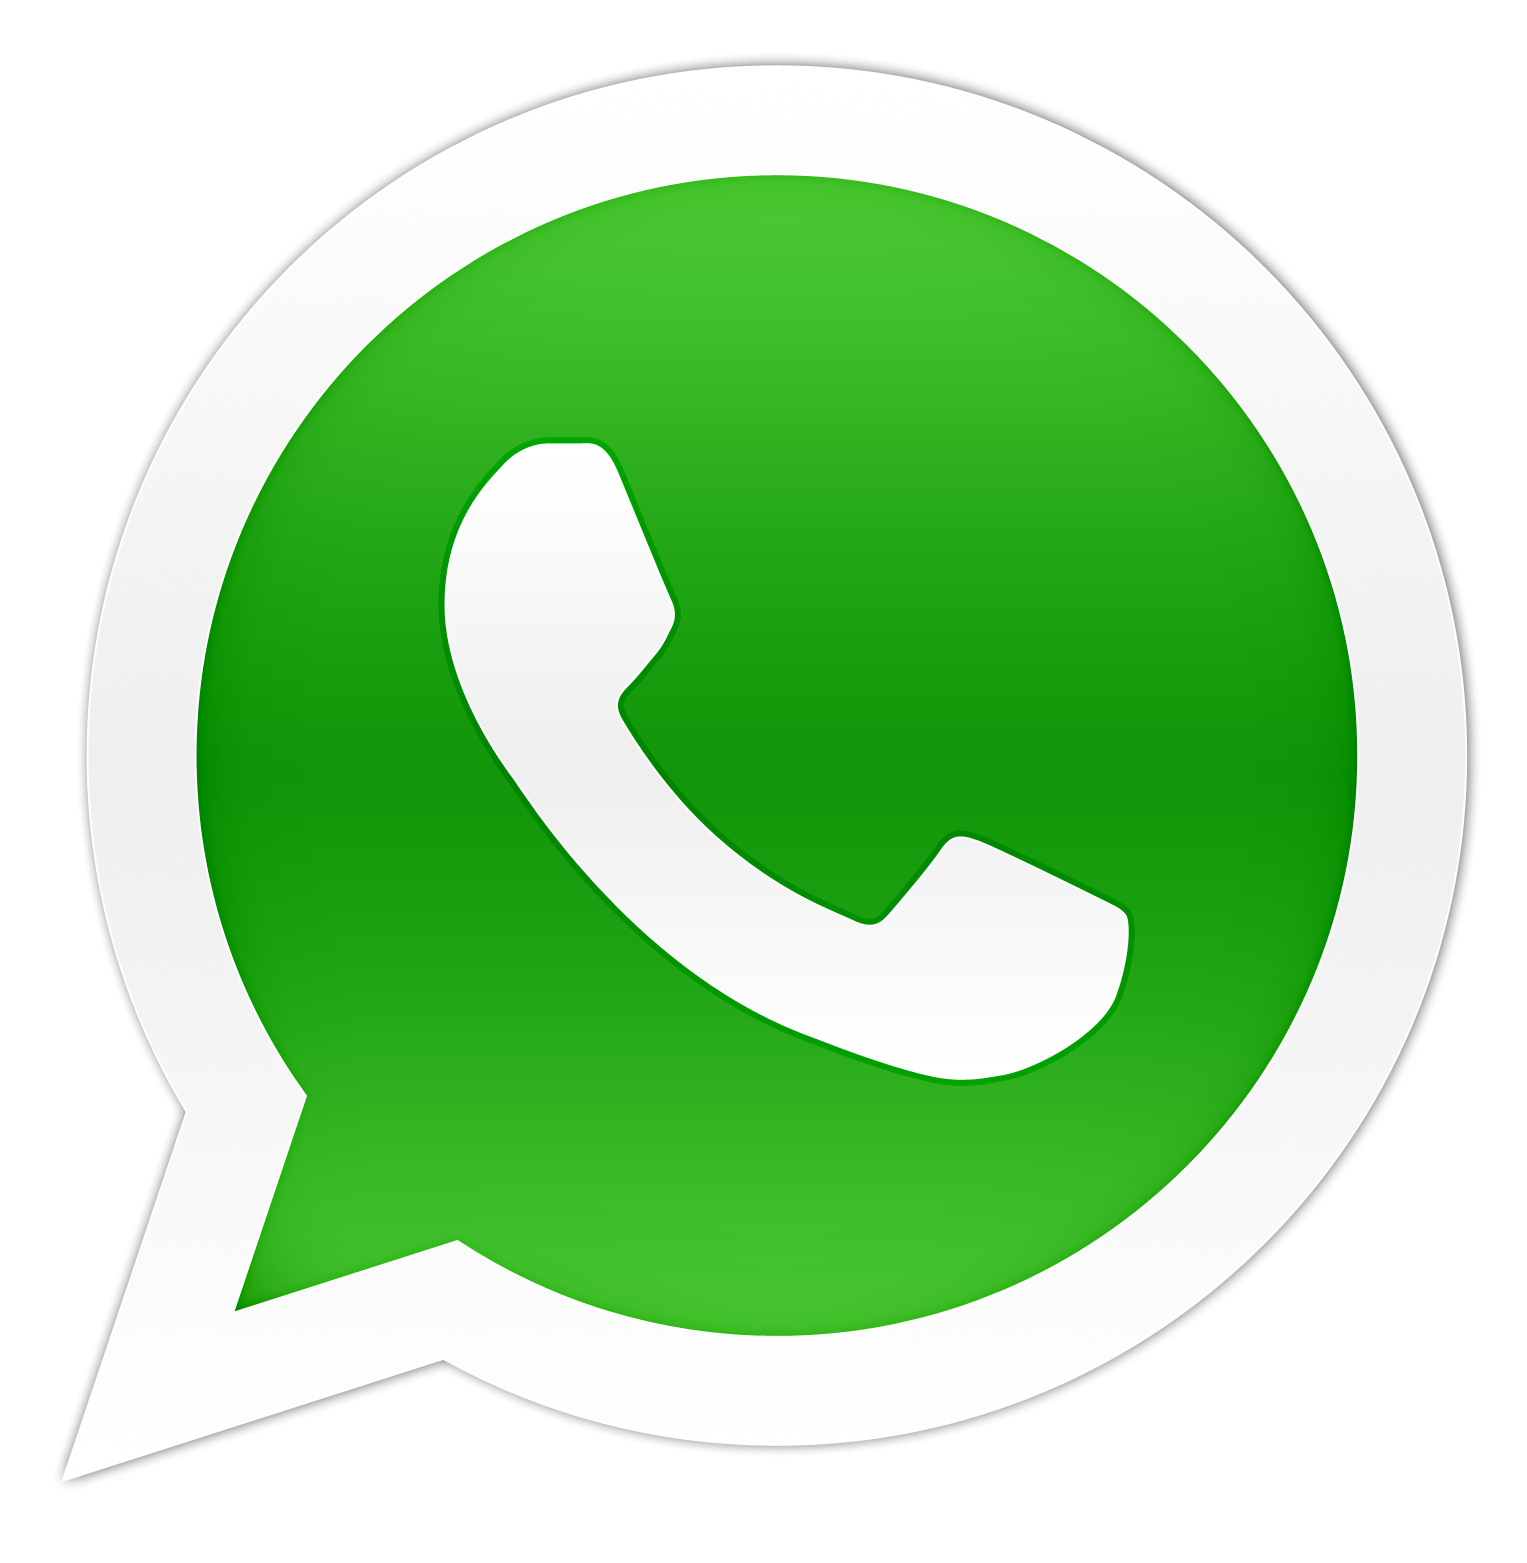 Fale conosco pelo Whatsapp!